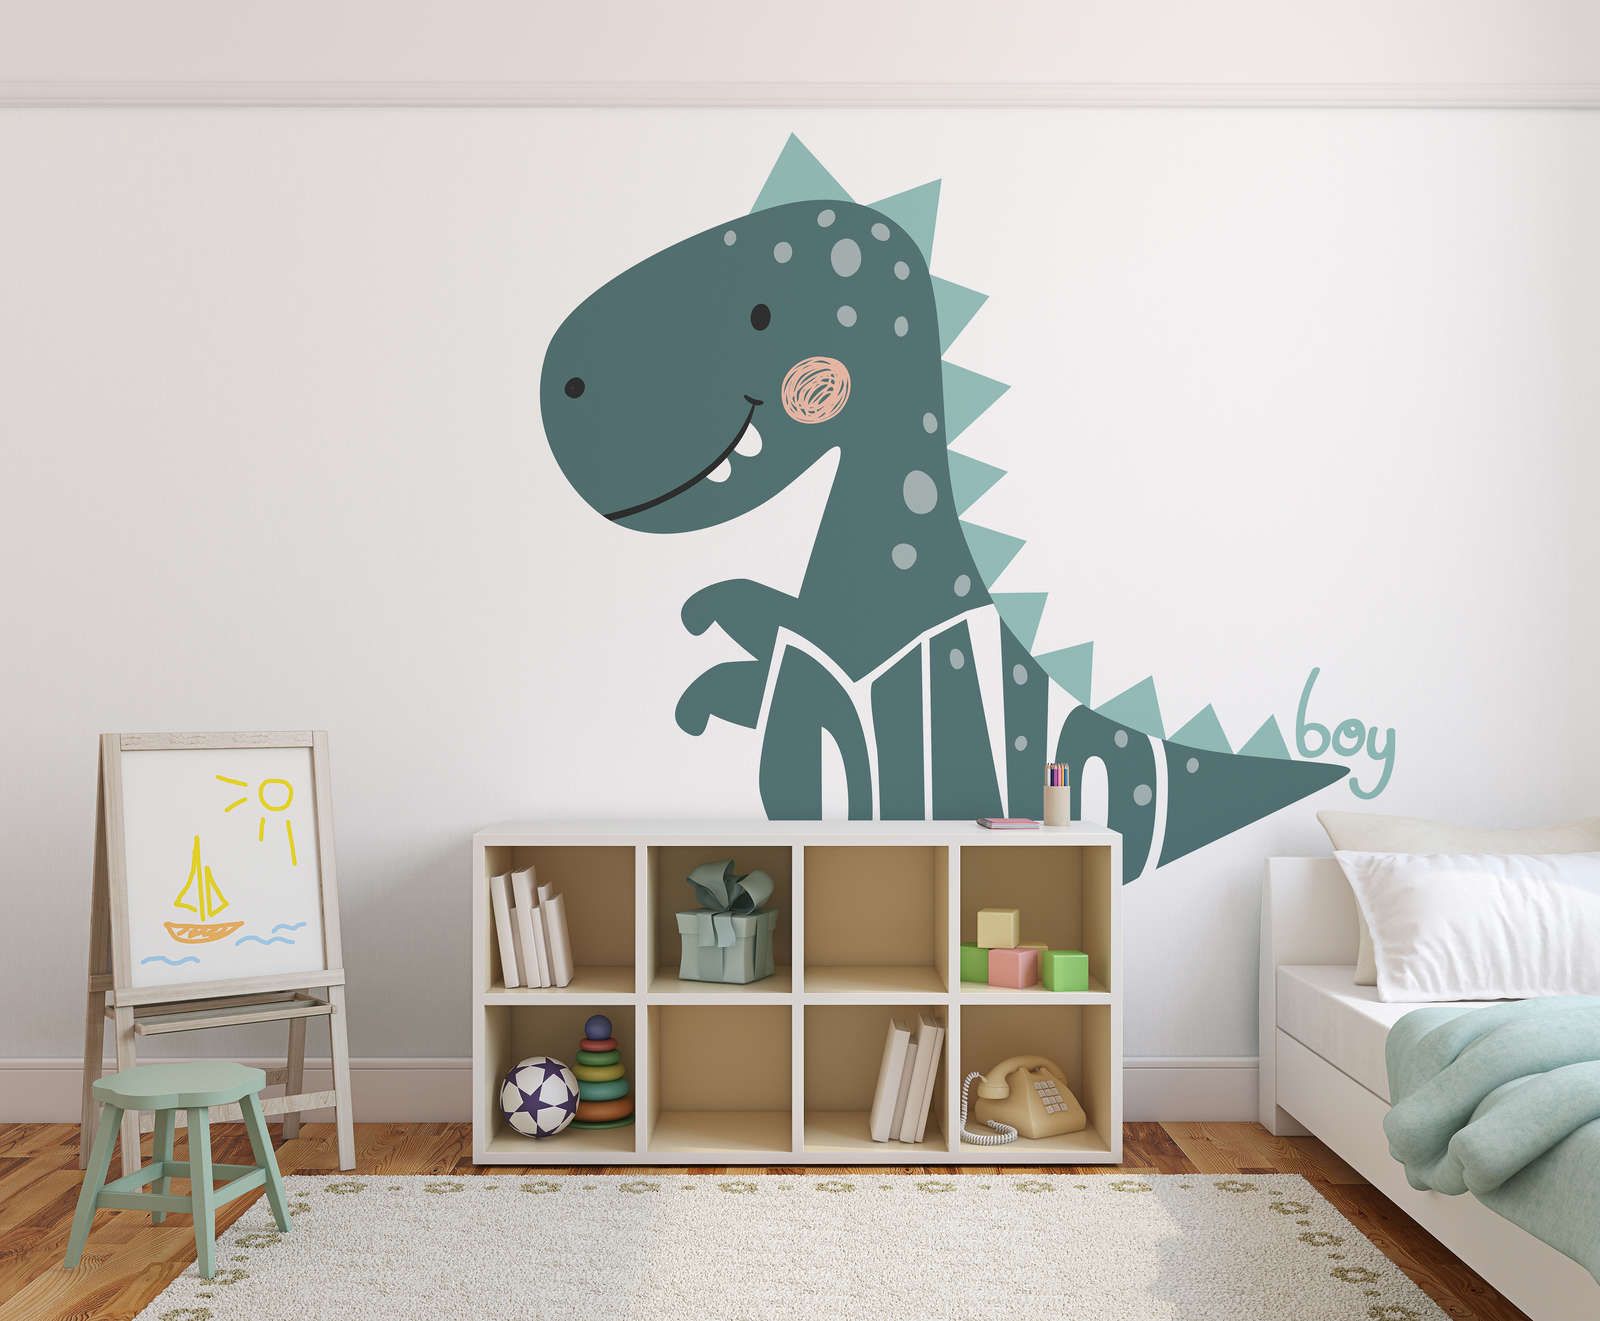             Children's Room Wallpaper with Dinosaur - Smooth & Matt Non-woven
        